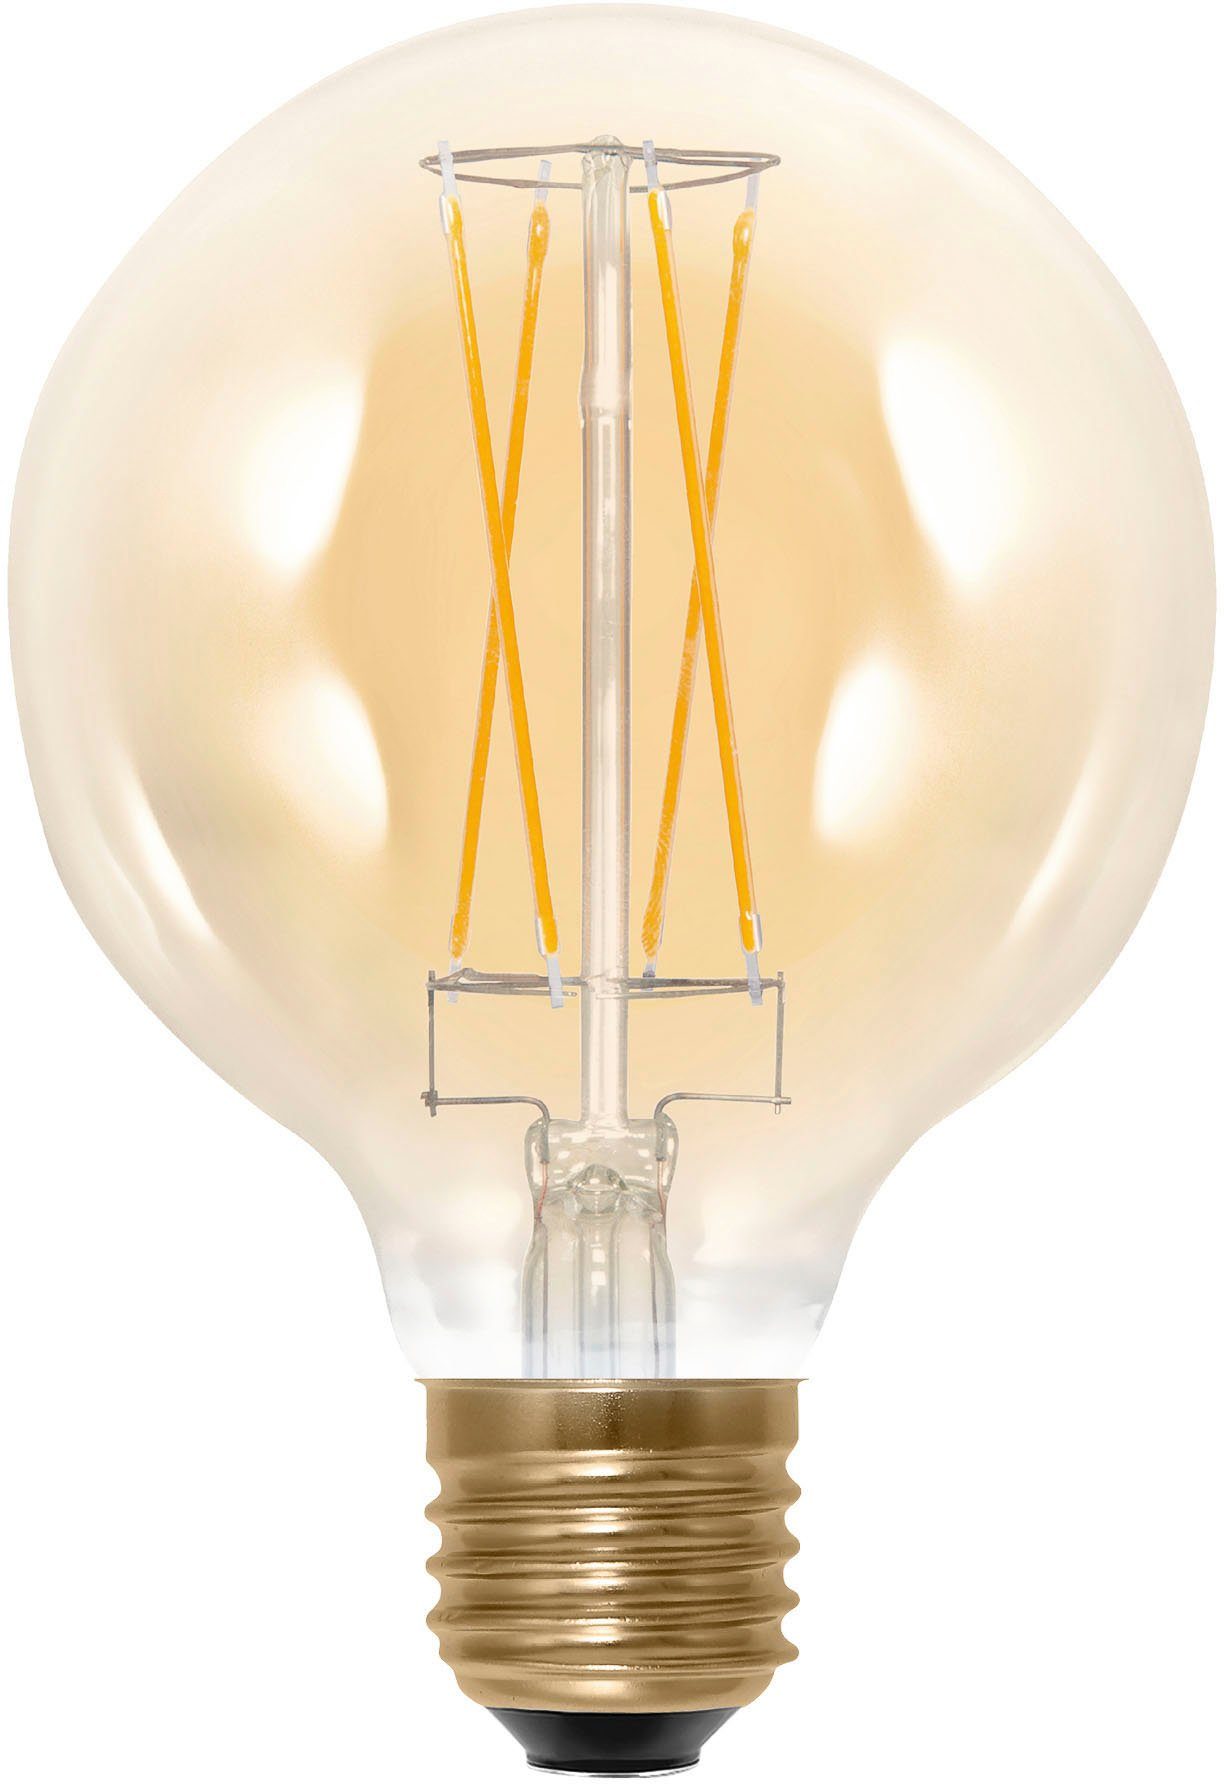 95 gold, St., dimmbar 90, CRI gold, LED-Leuchtmittel Globe Extra-Warmweiß, SEGULA Globe LED 1 5W, E27, E27, LED 95